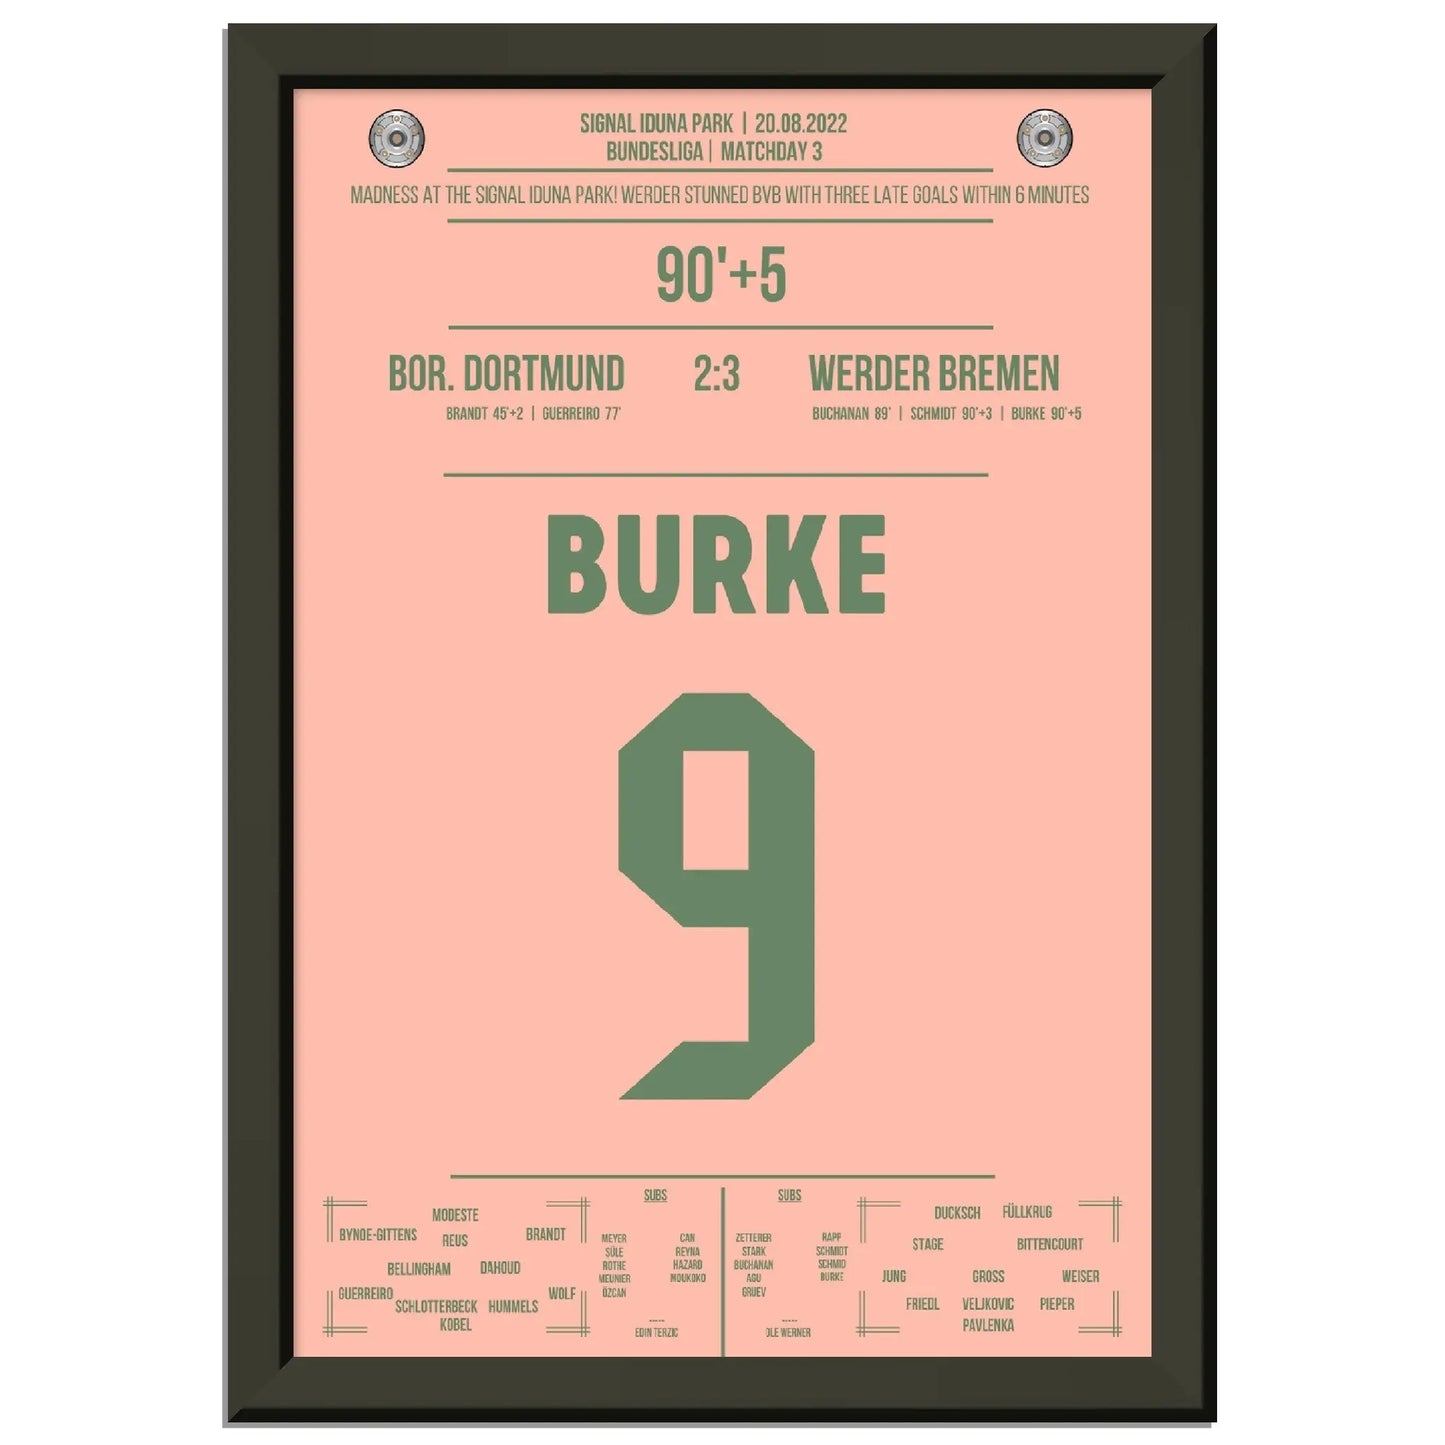 Burke krönt Bremen's irre Aufholjagd in Dortmund 2022 